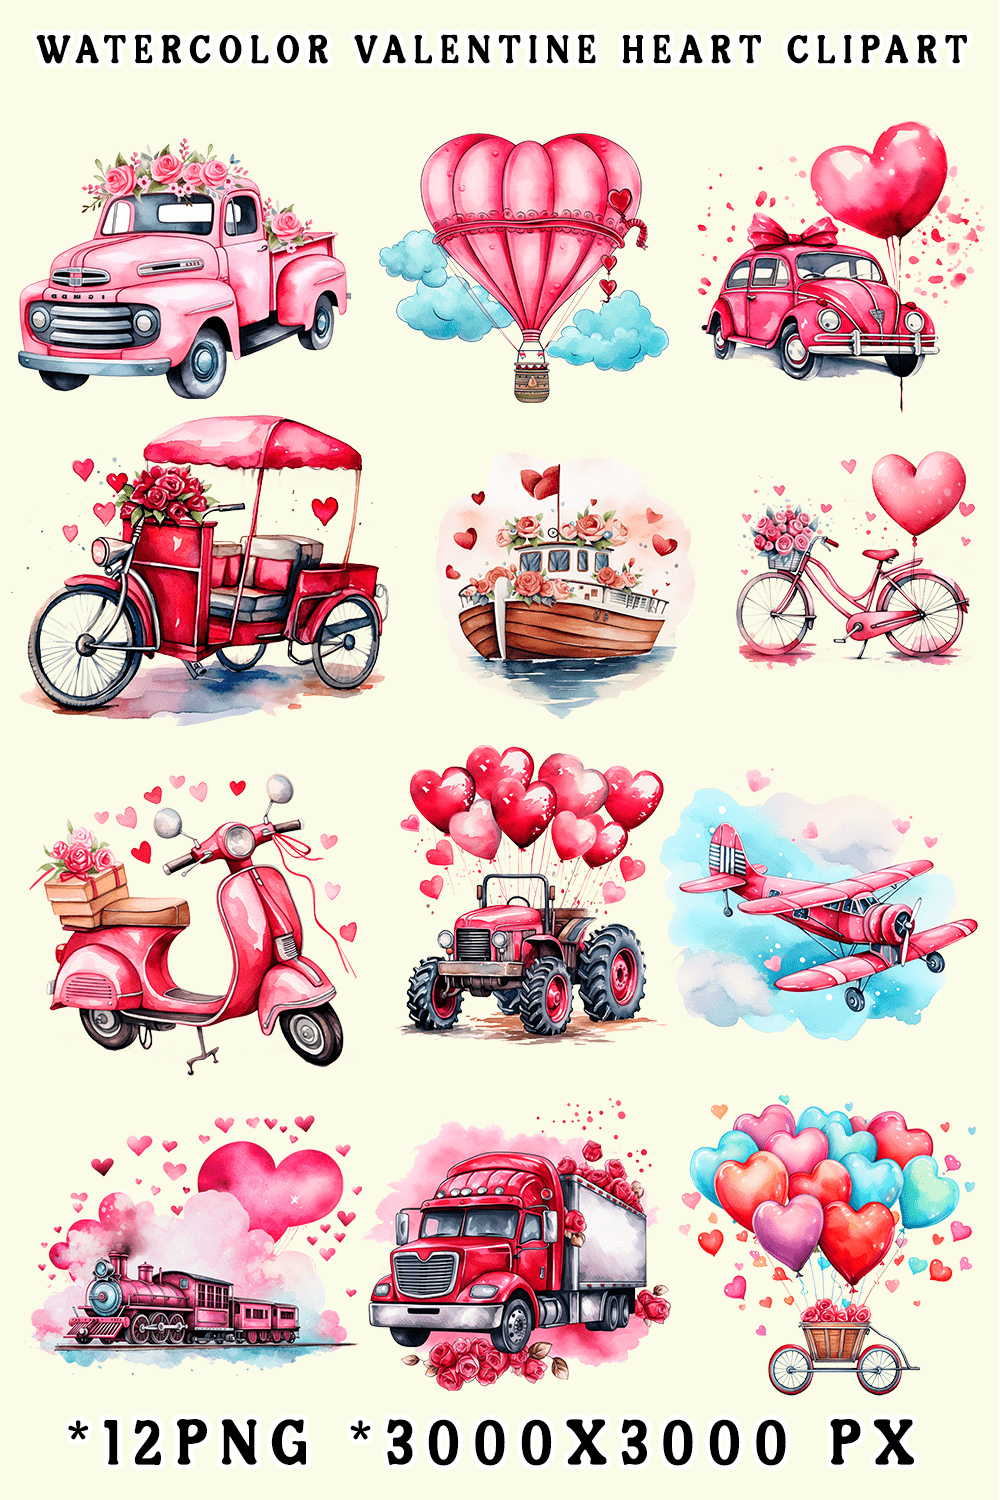 Watercolor Valentine's Vehicles Clipart pinterest preview image.